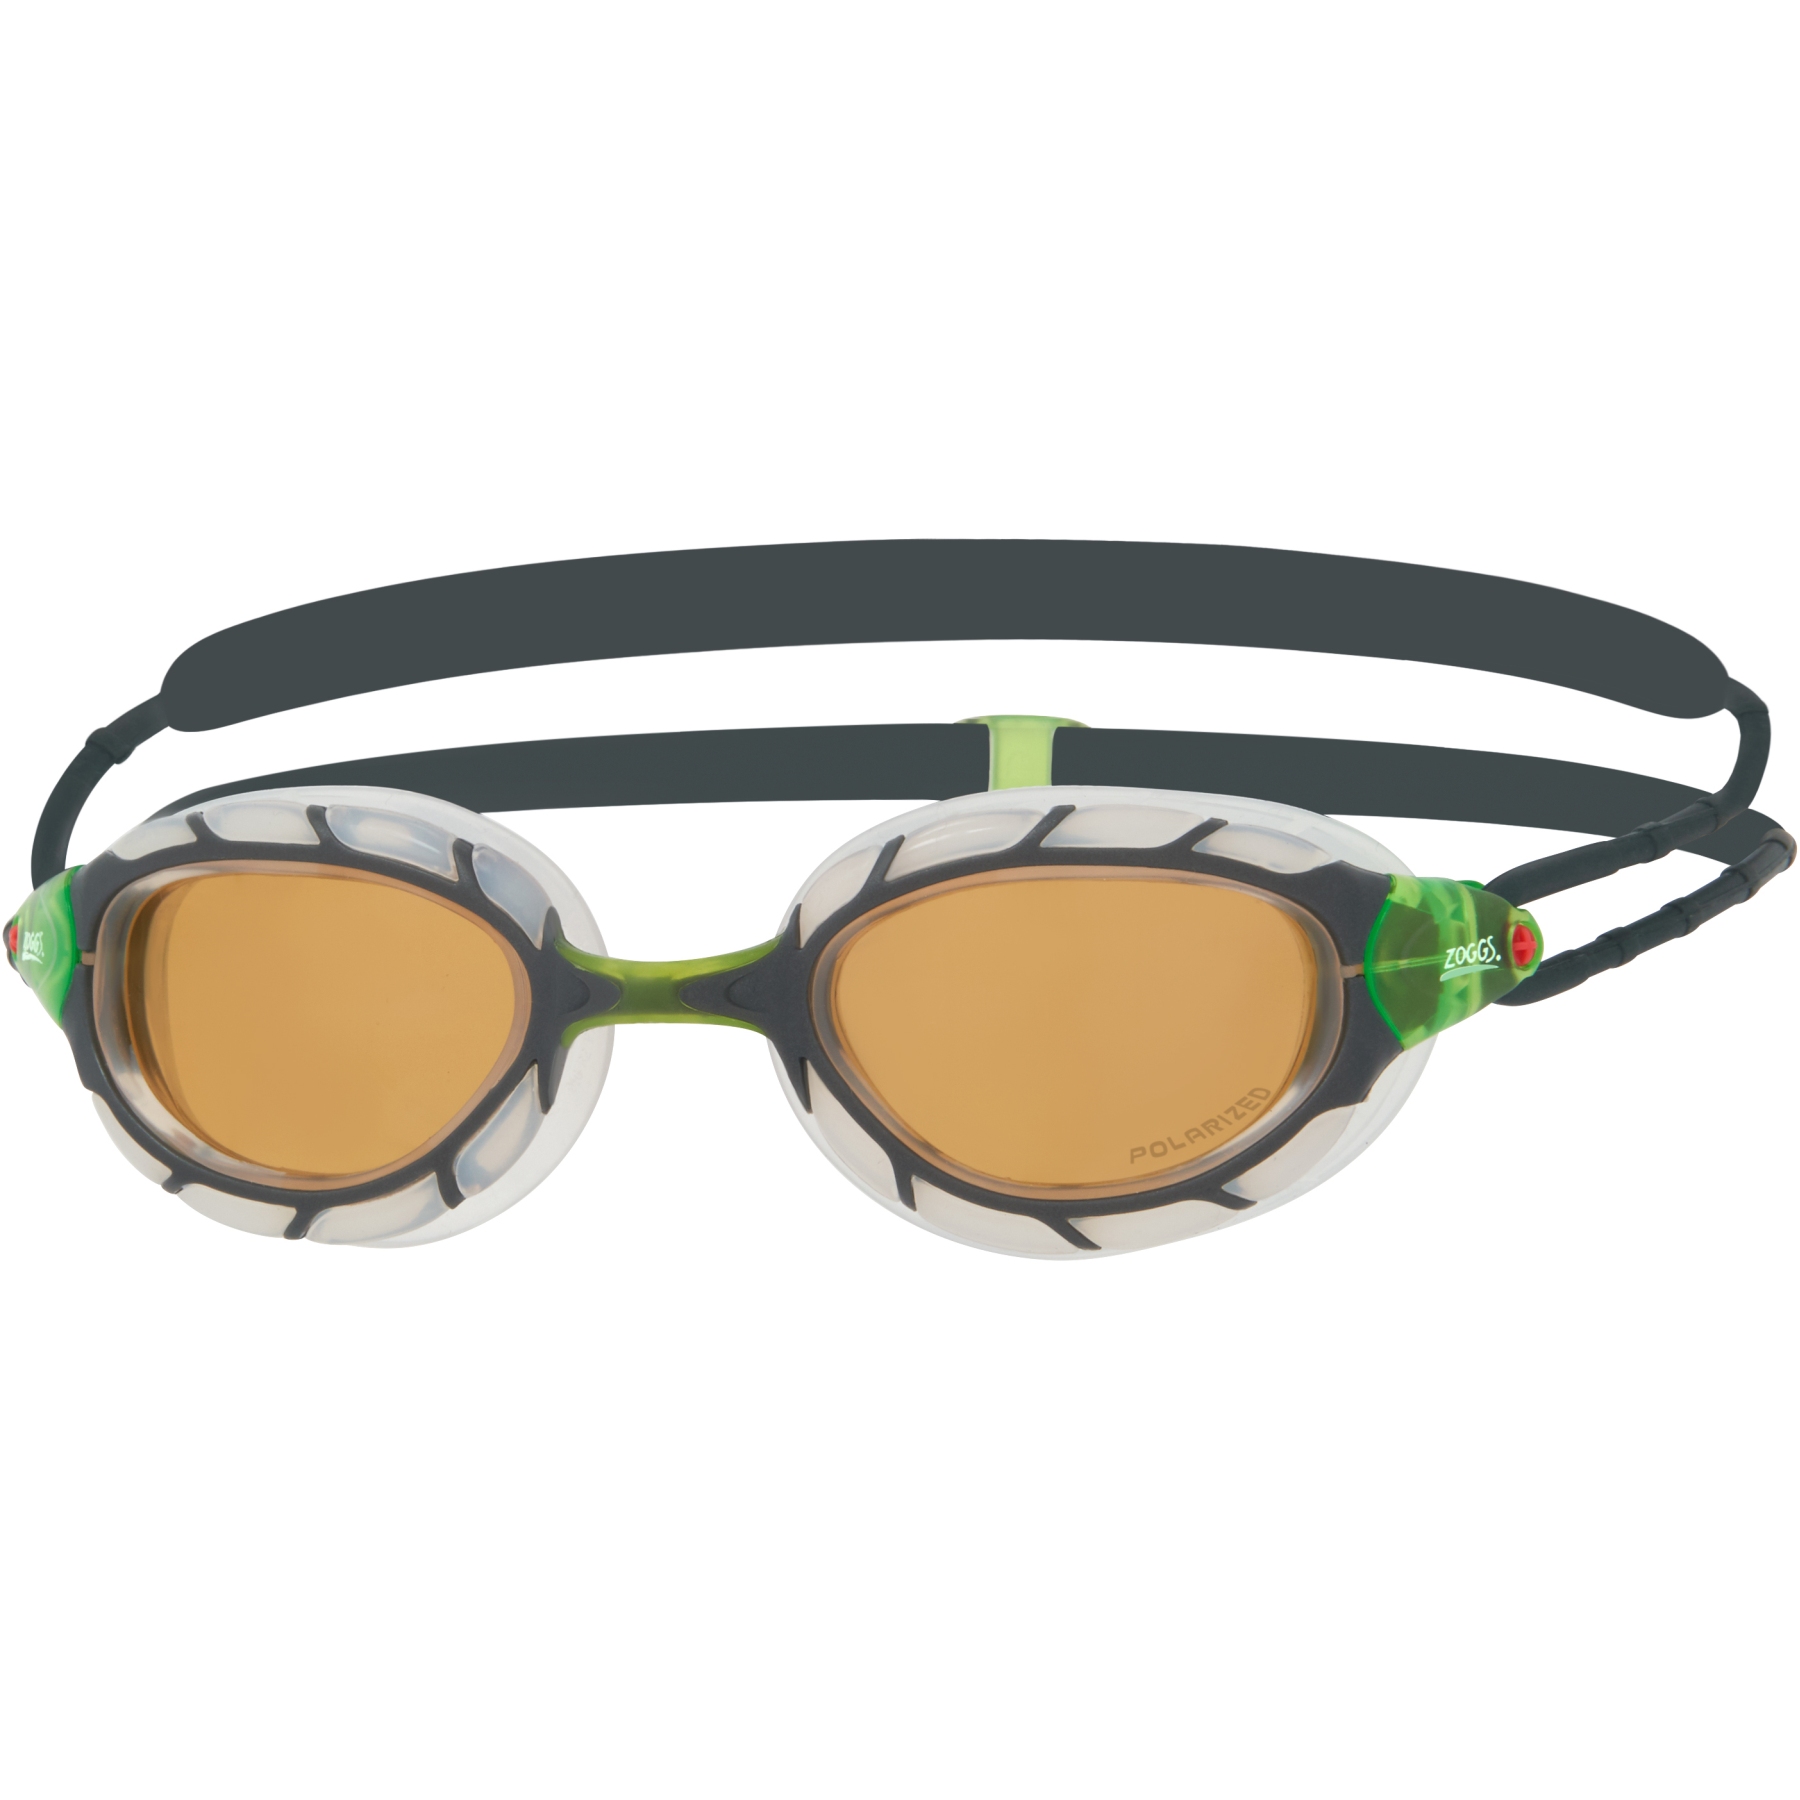 Productfoto van Zoggs Predator Swimming Goggles - Polarized Ultra Copper Lenses - Small Fit - Grey/Clear